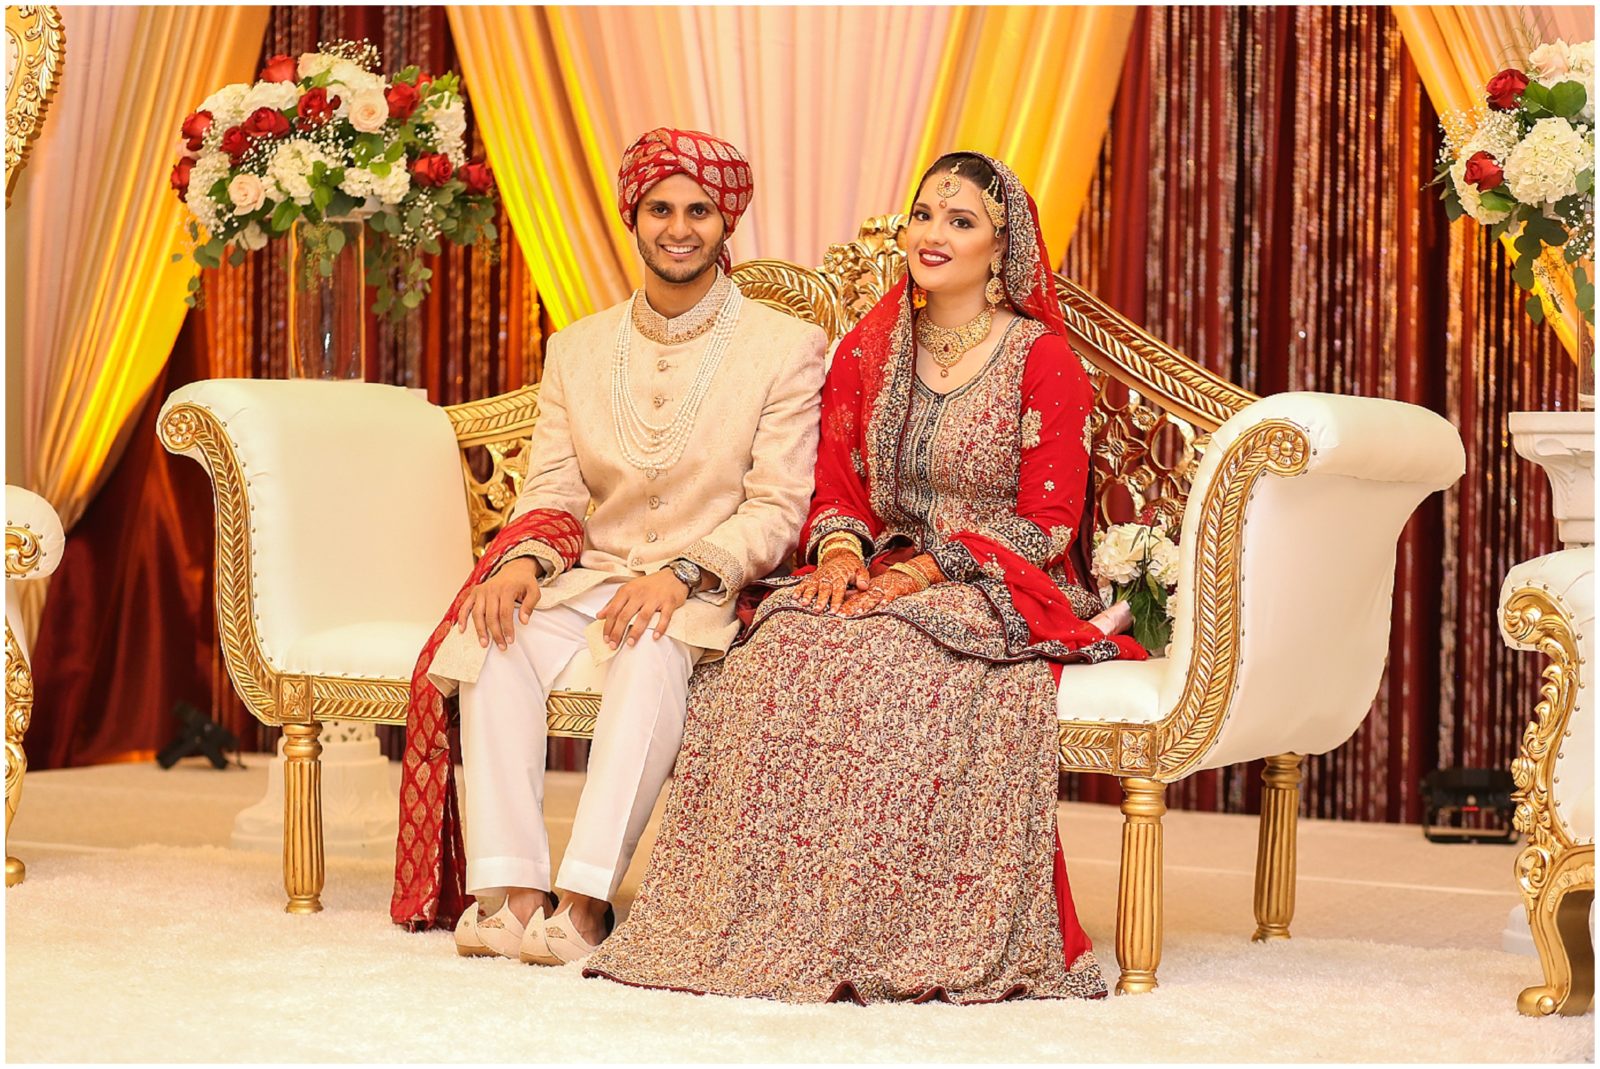 HENNA - INDIAN BRIDE - MUSLIM BRIDE - WEDDING DECOR AT THE OP DOUBLE TREE KANSAS CITY